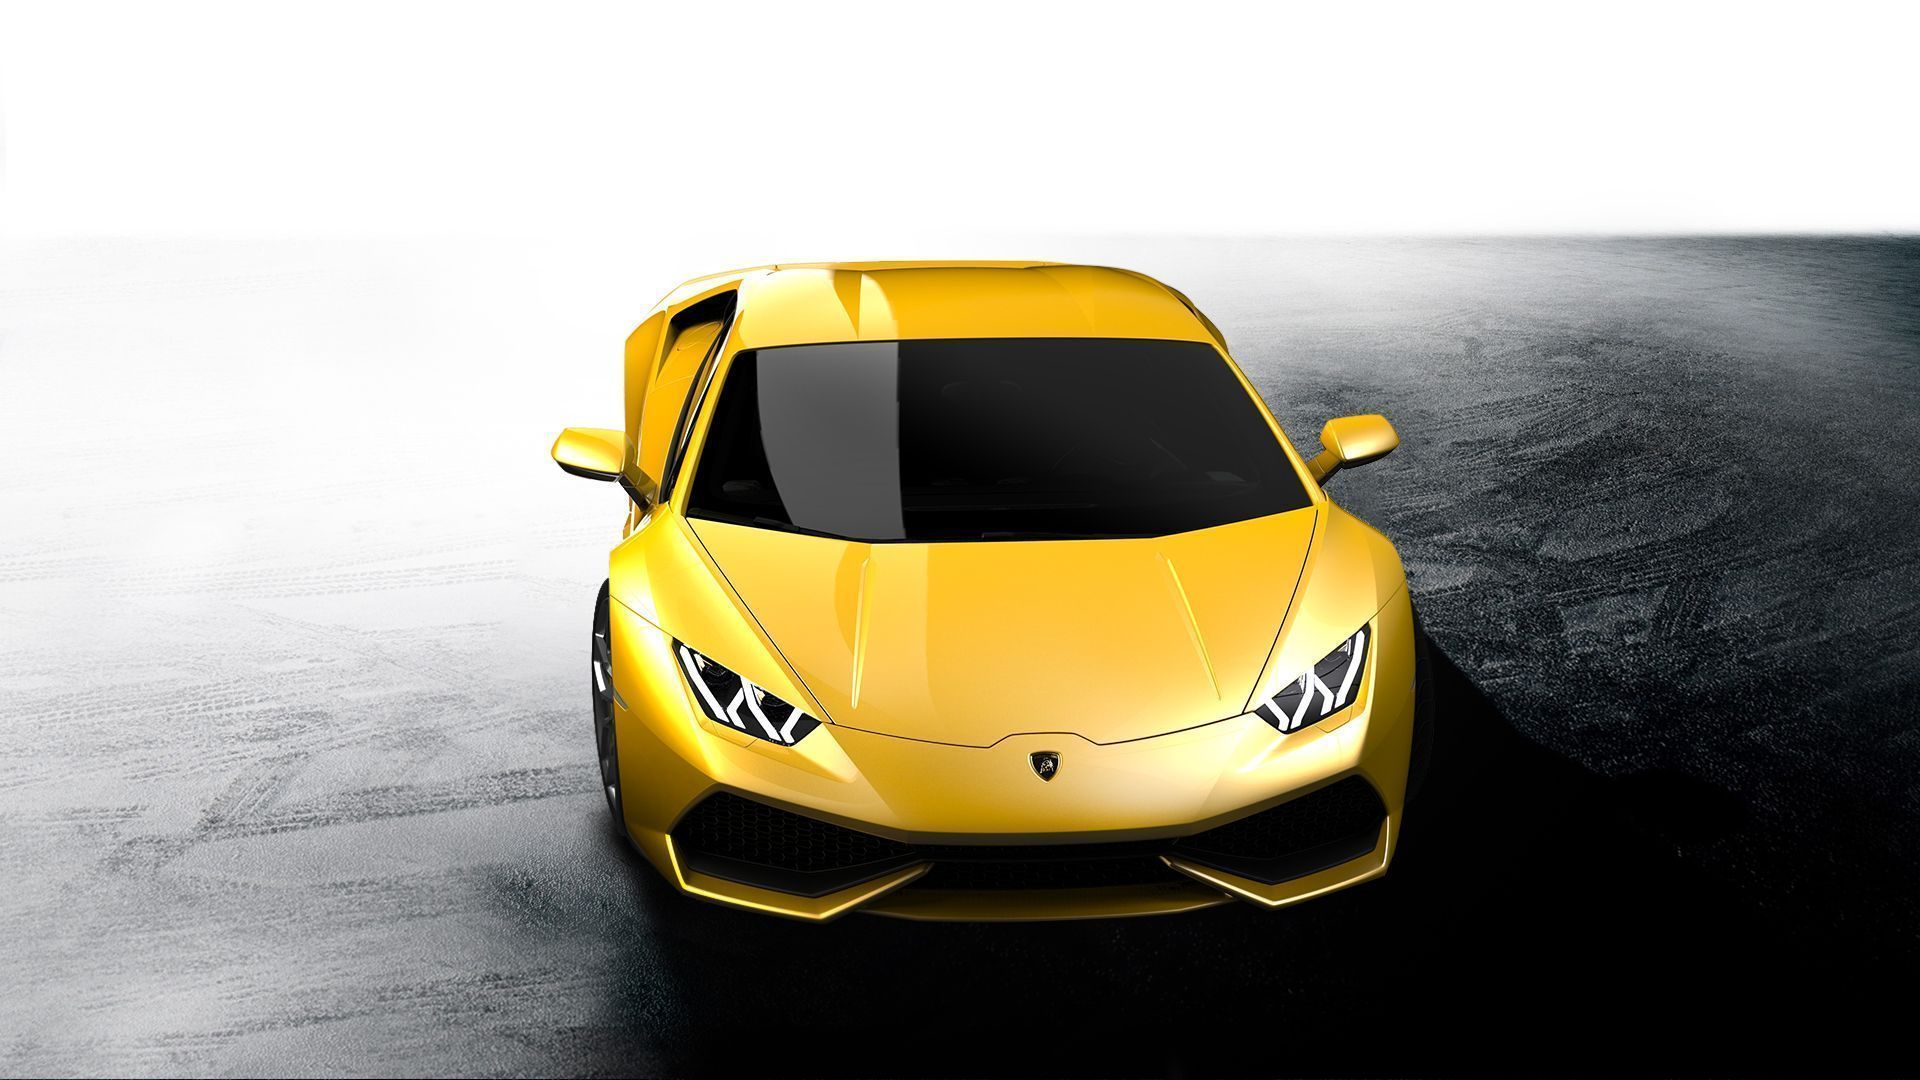 Lamborghini Huracan HD Wallpaper | 1920x1080 | ID:50204